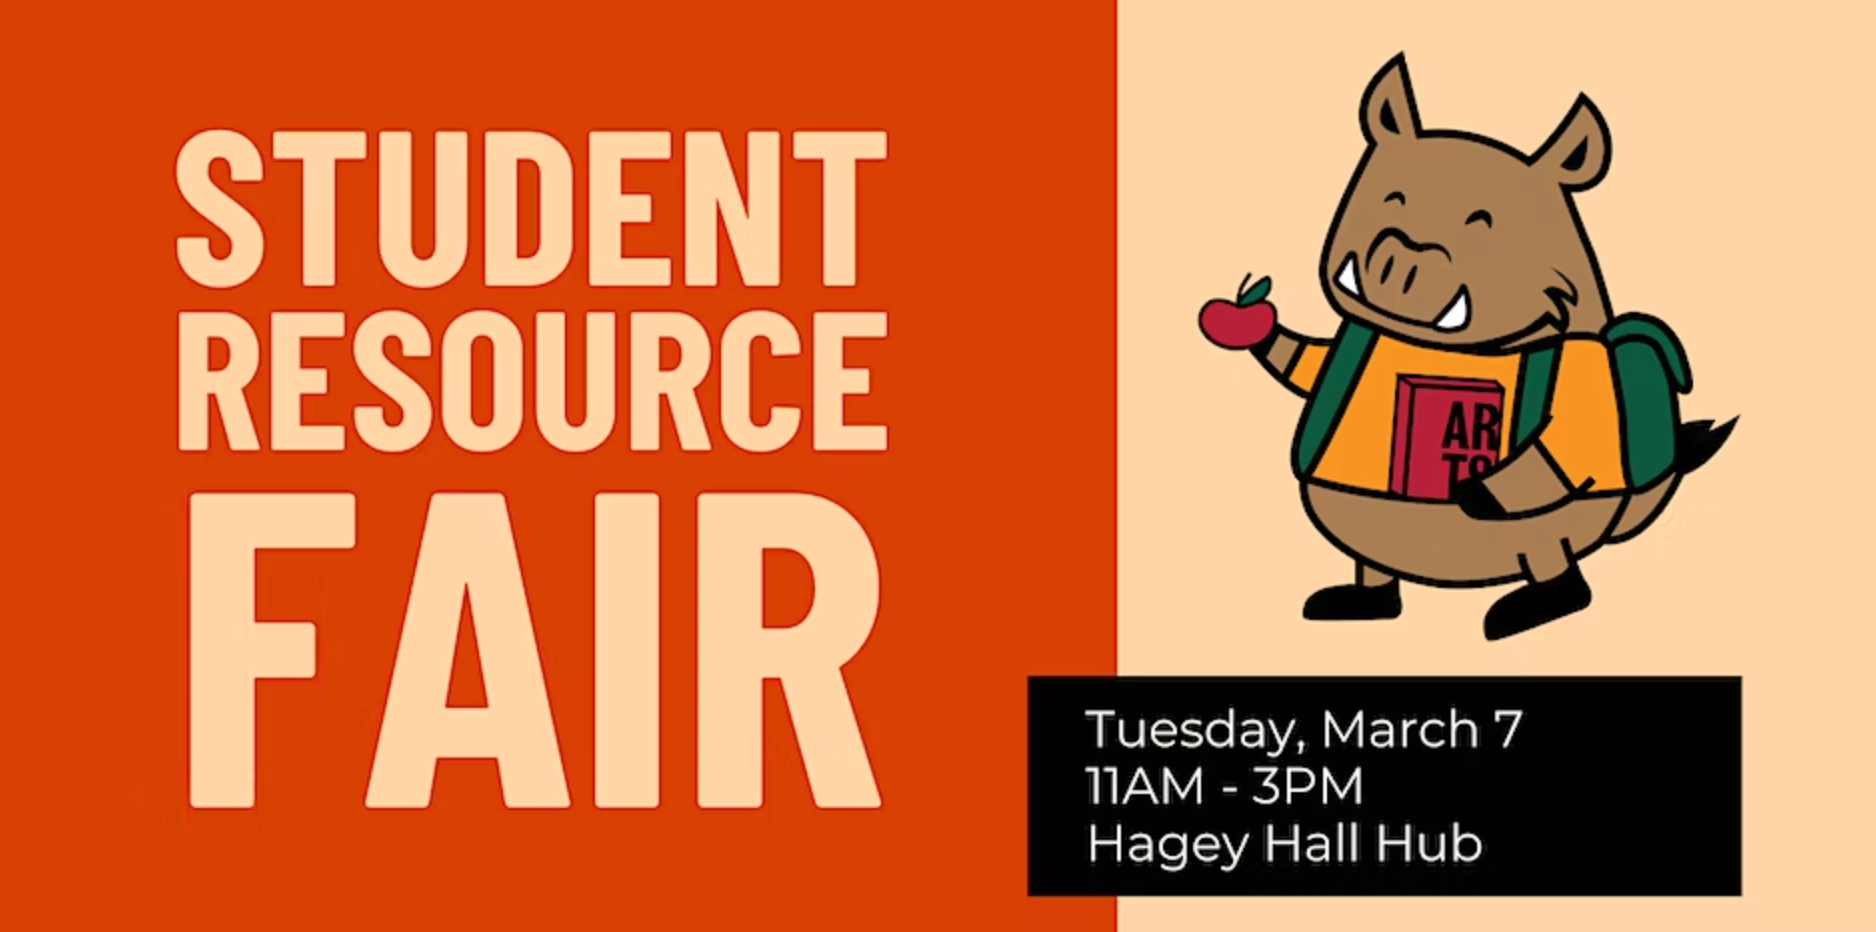 Student Resource Fair poster